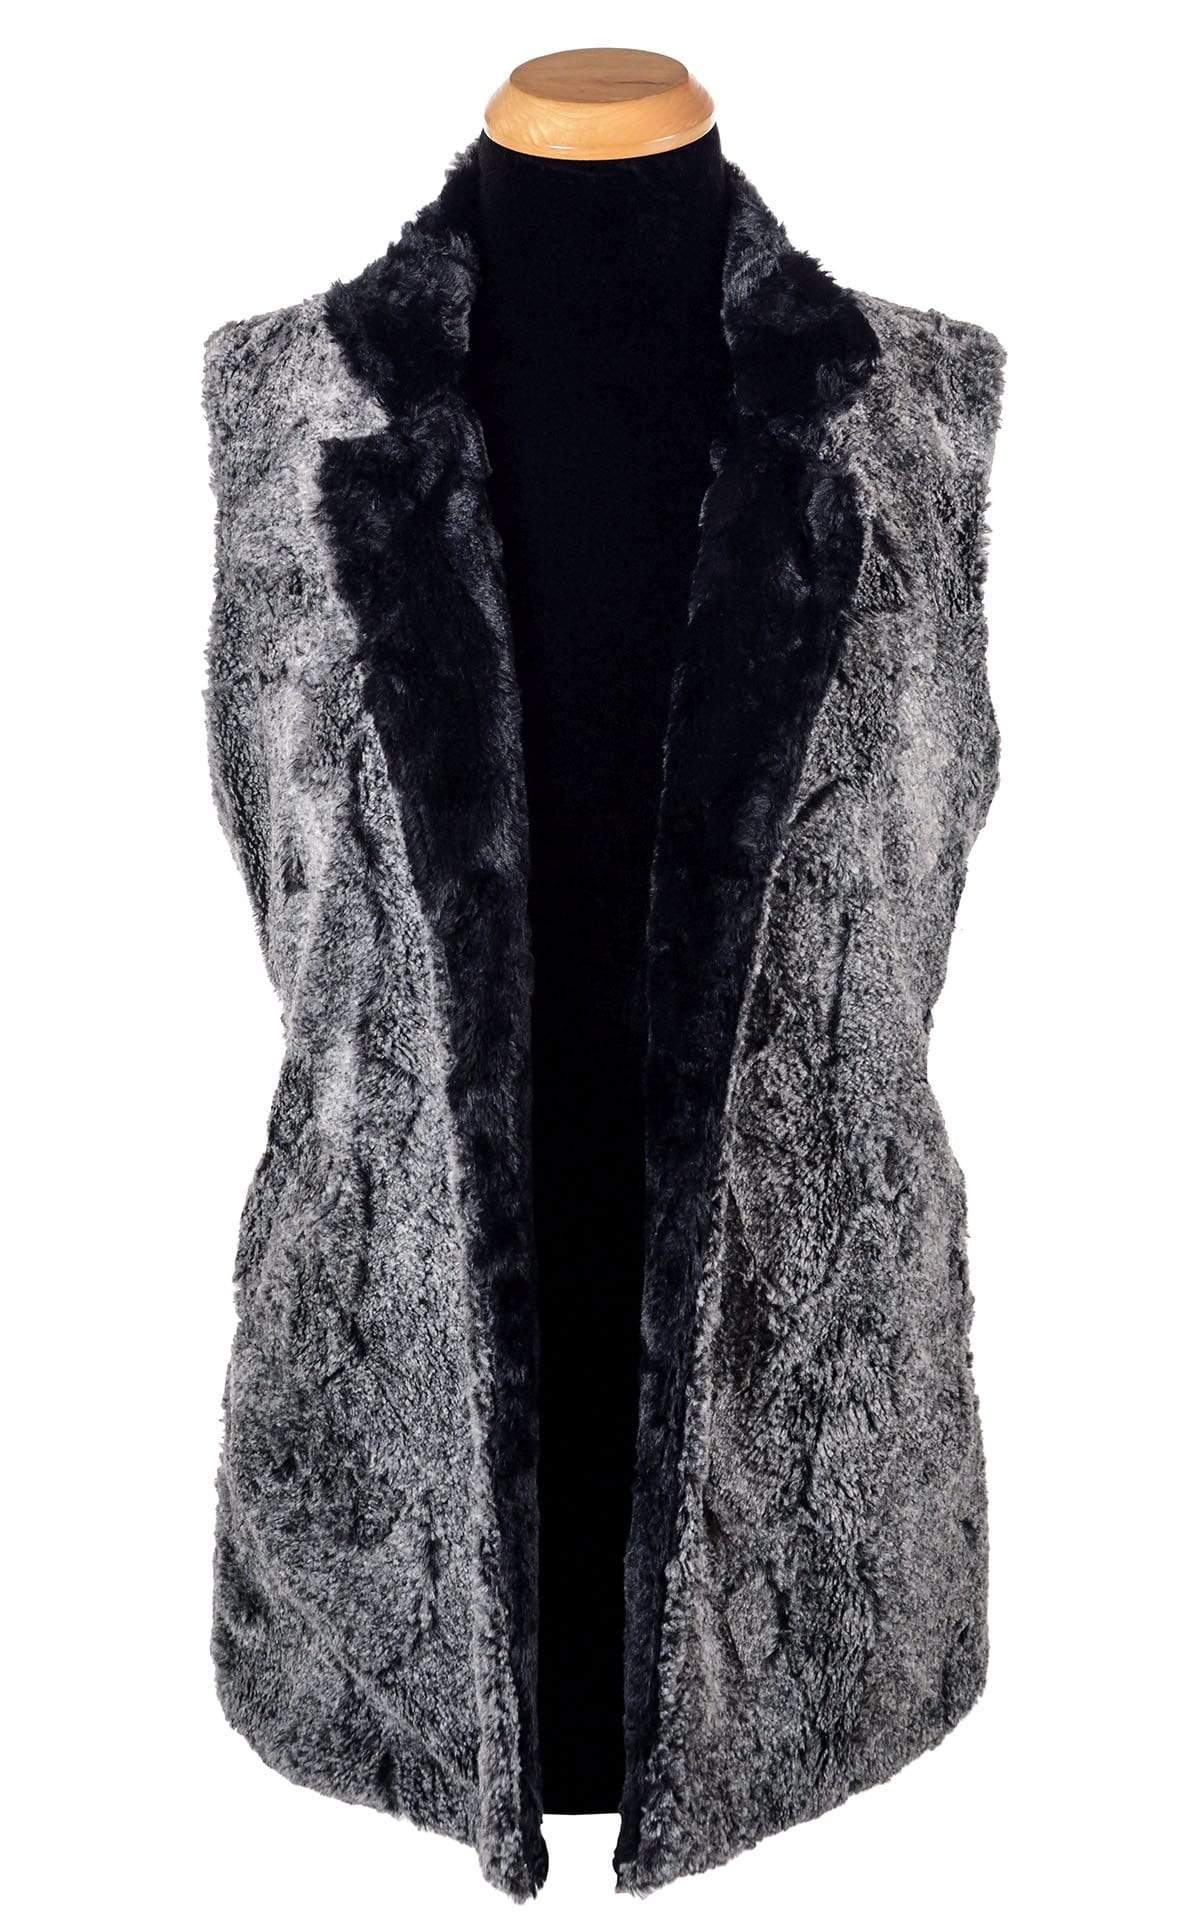 Mandarin Vest Short, Reversible less pockets - Luxury Faux Fur Nimbus with Cuddly Fur in Black